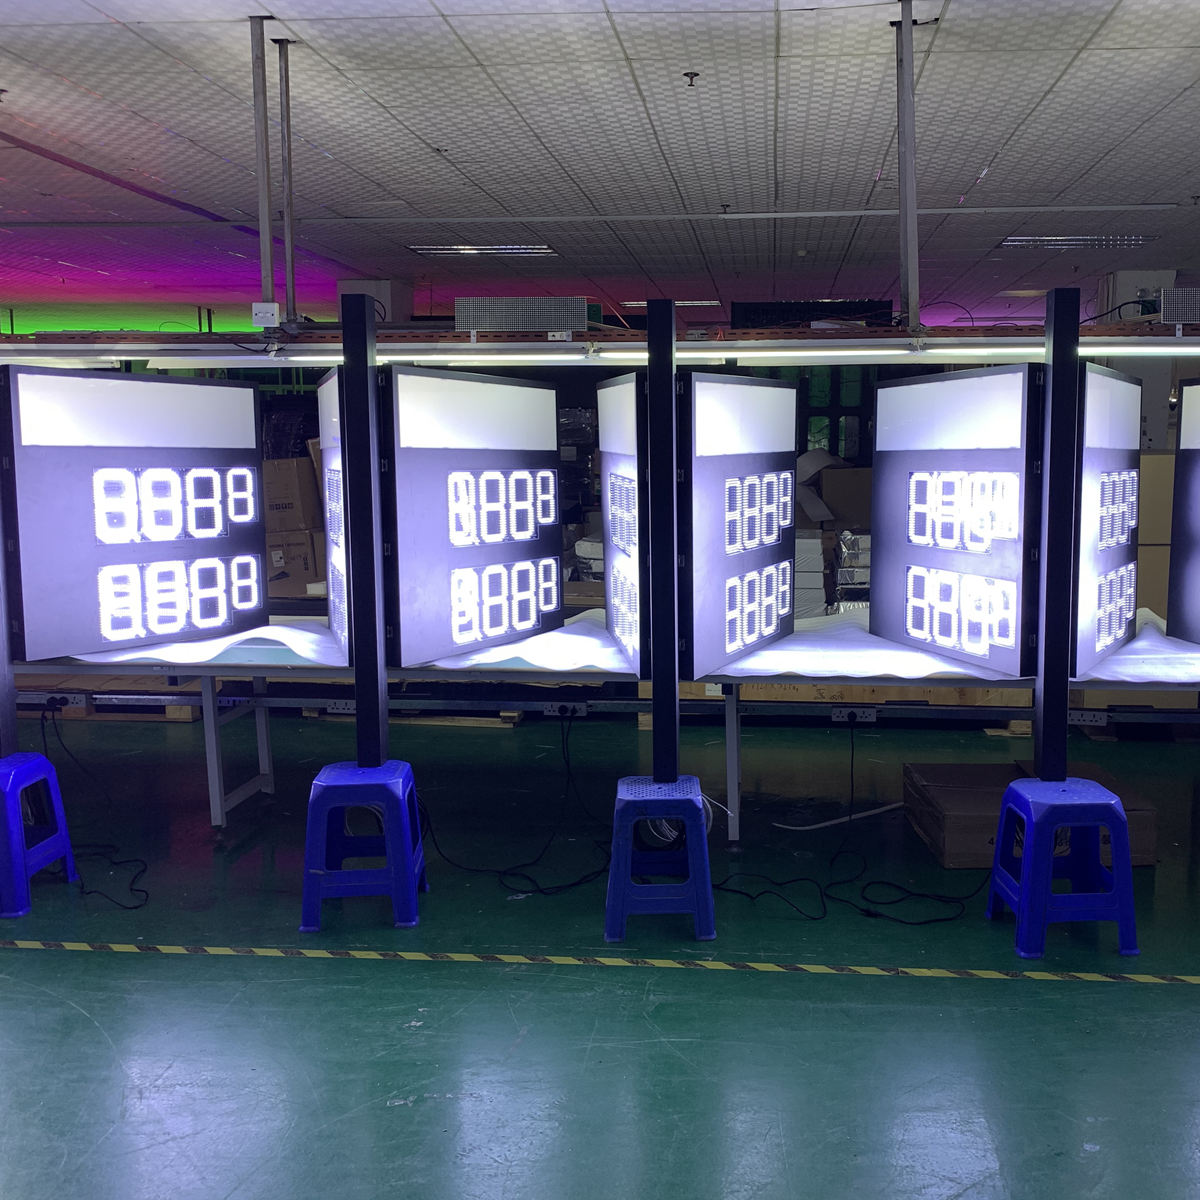 Mongolia LED gas price displays